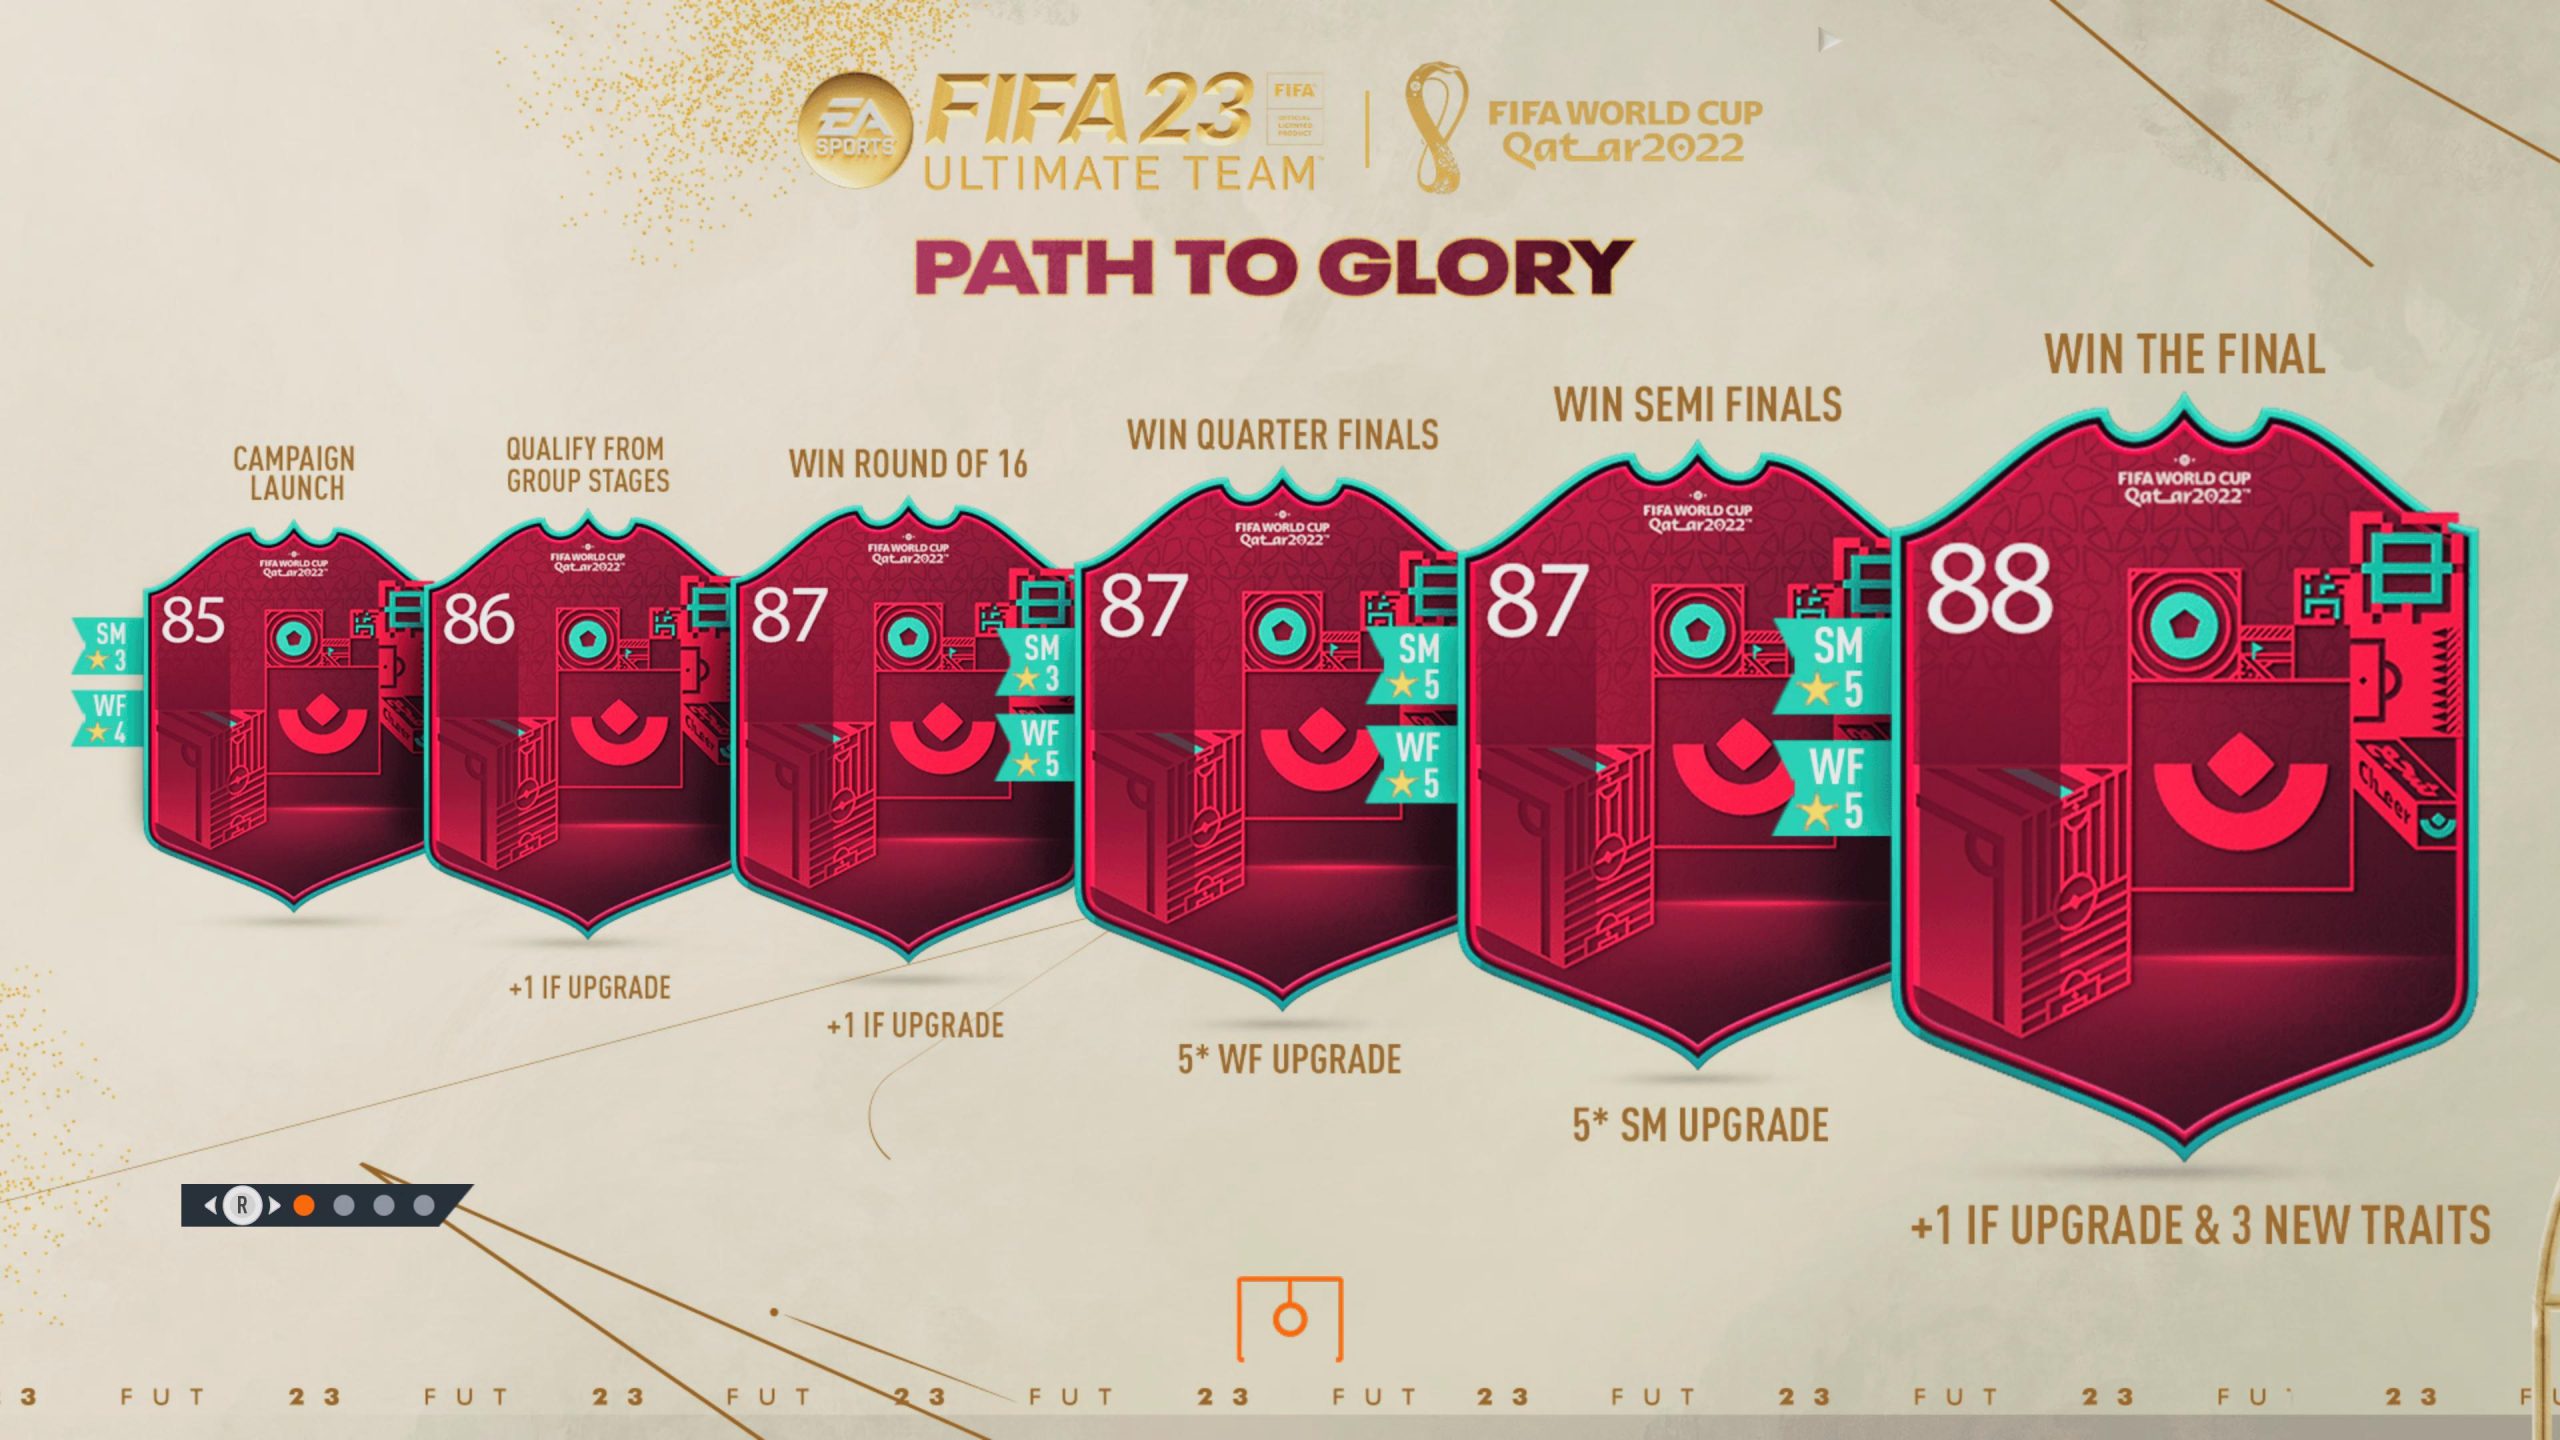 FIFA-23-Path-to-Glory-1-scaled.jpg